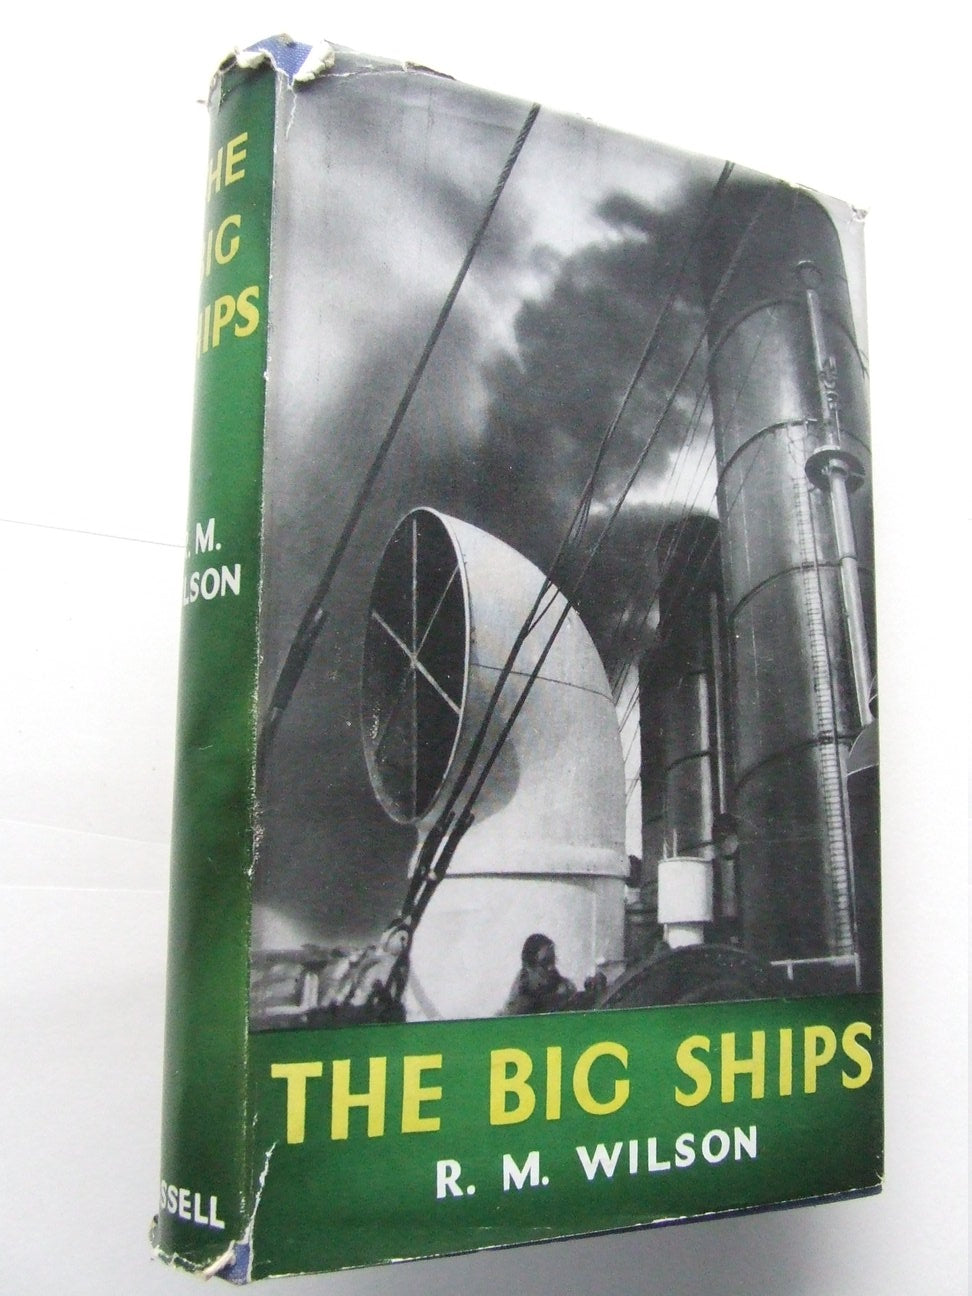 The Big Ships